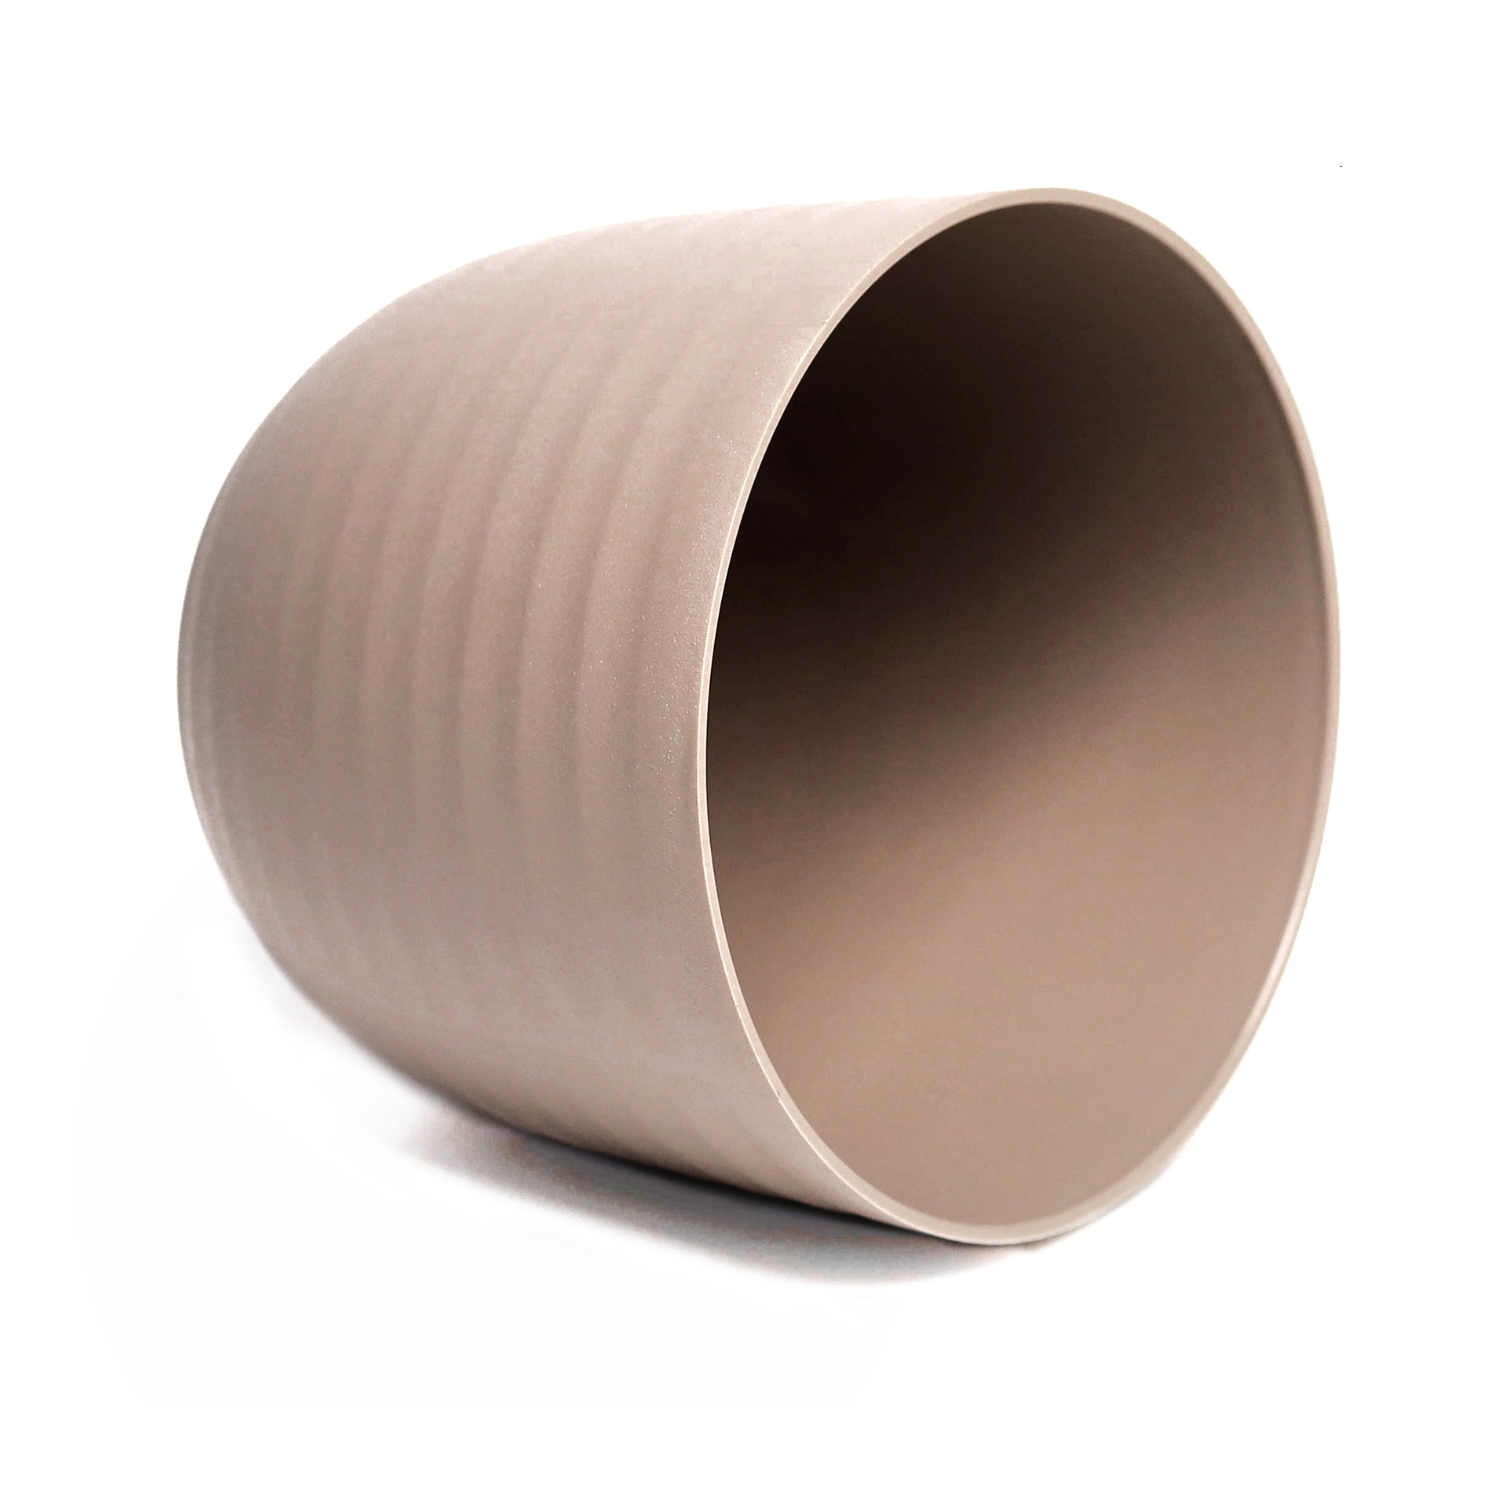 Verona 22cm Round Plastic Pot For Home & Garden